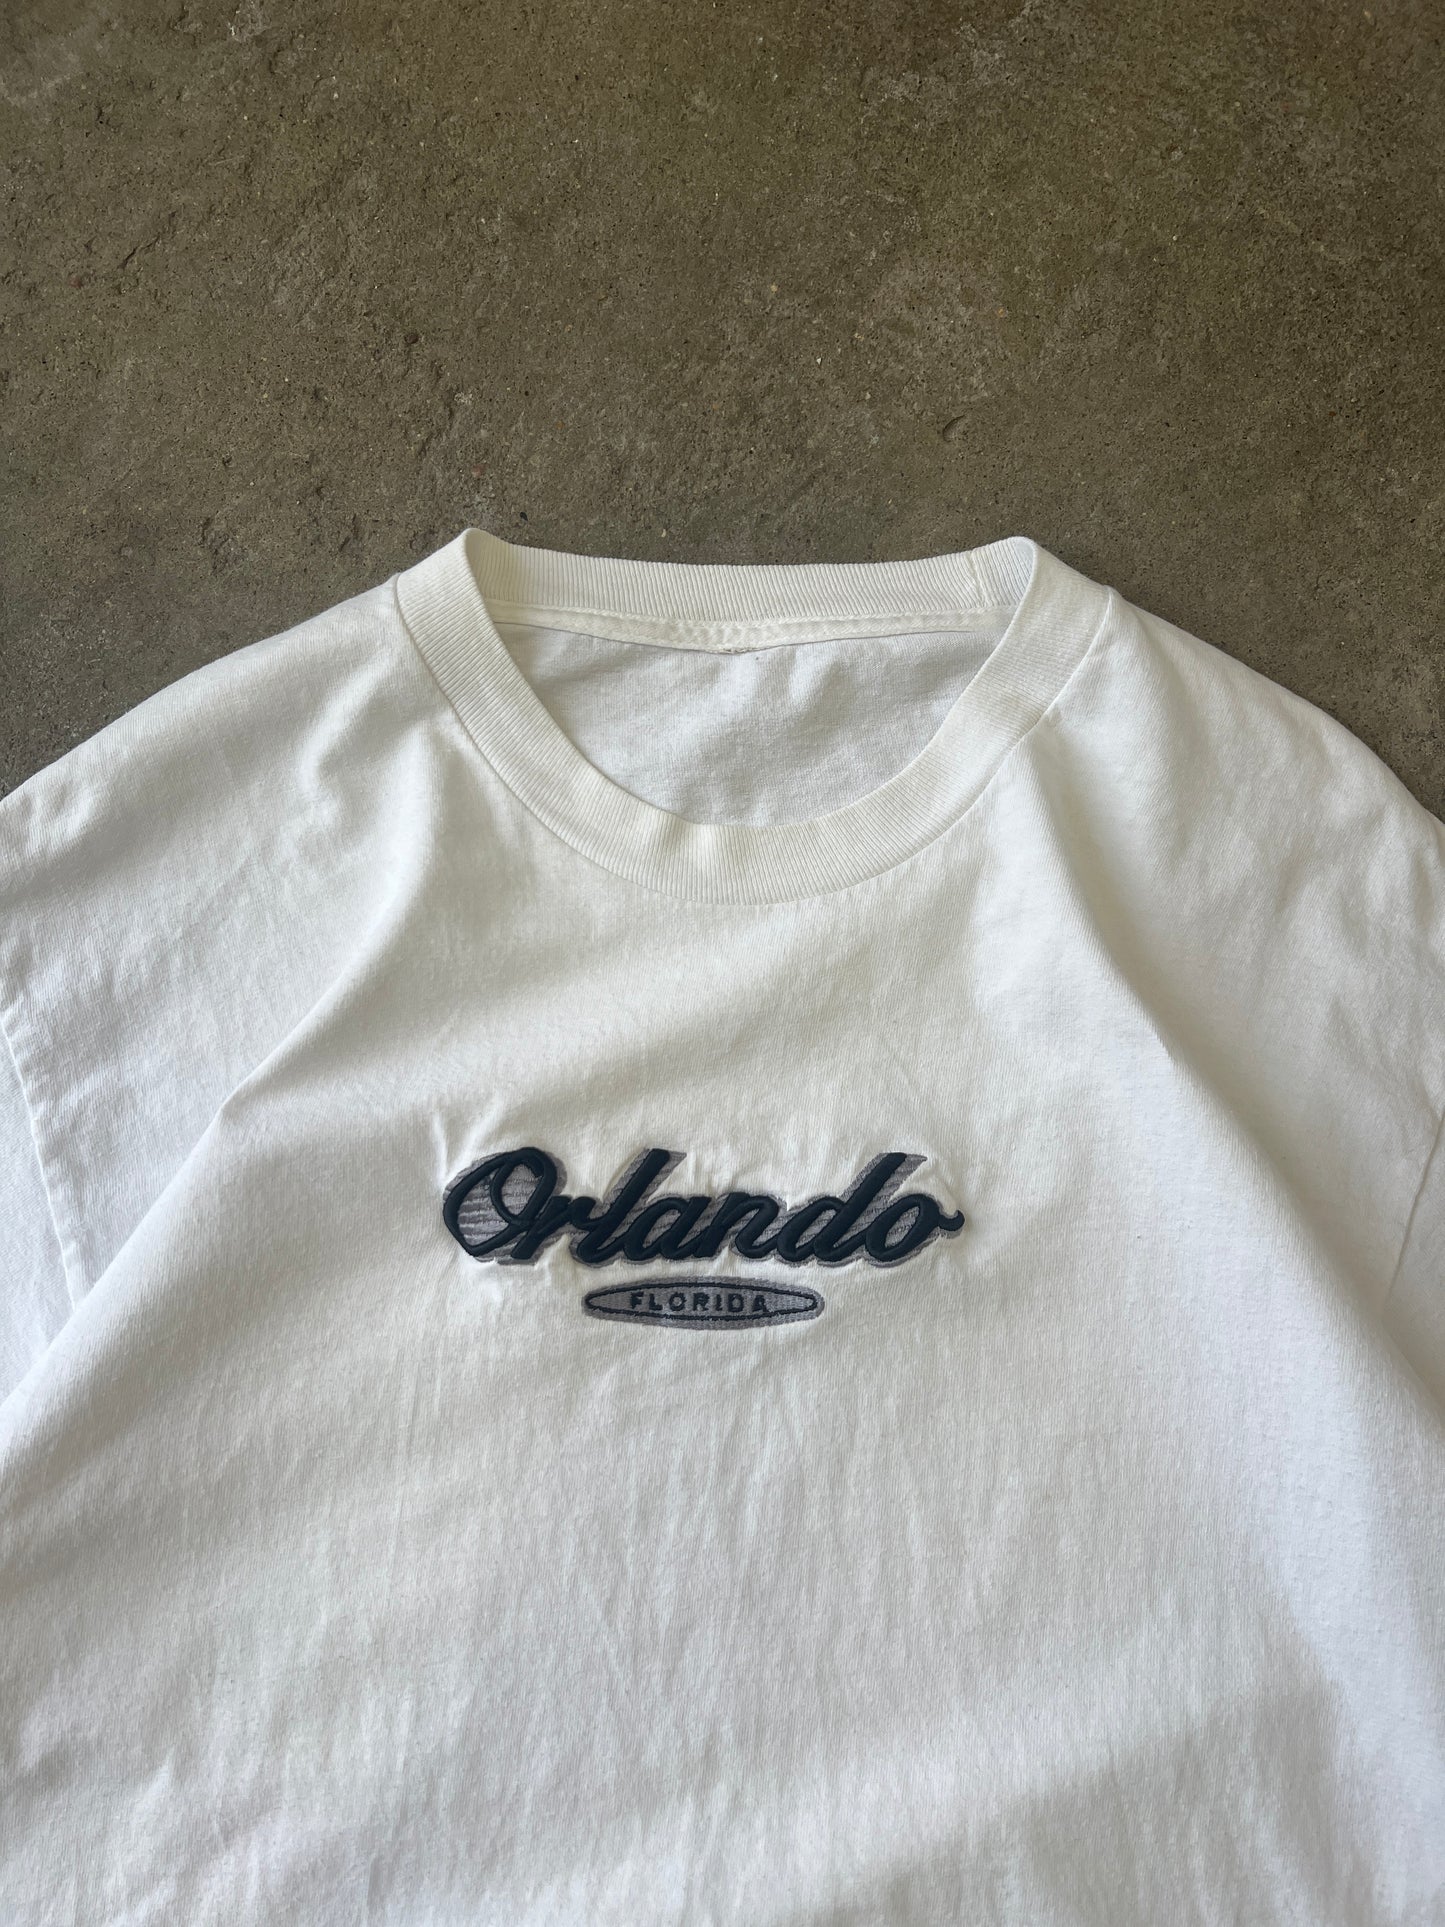 Vintage Orlando Shirt - XL